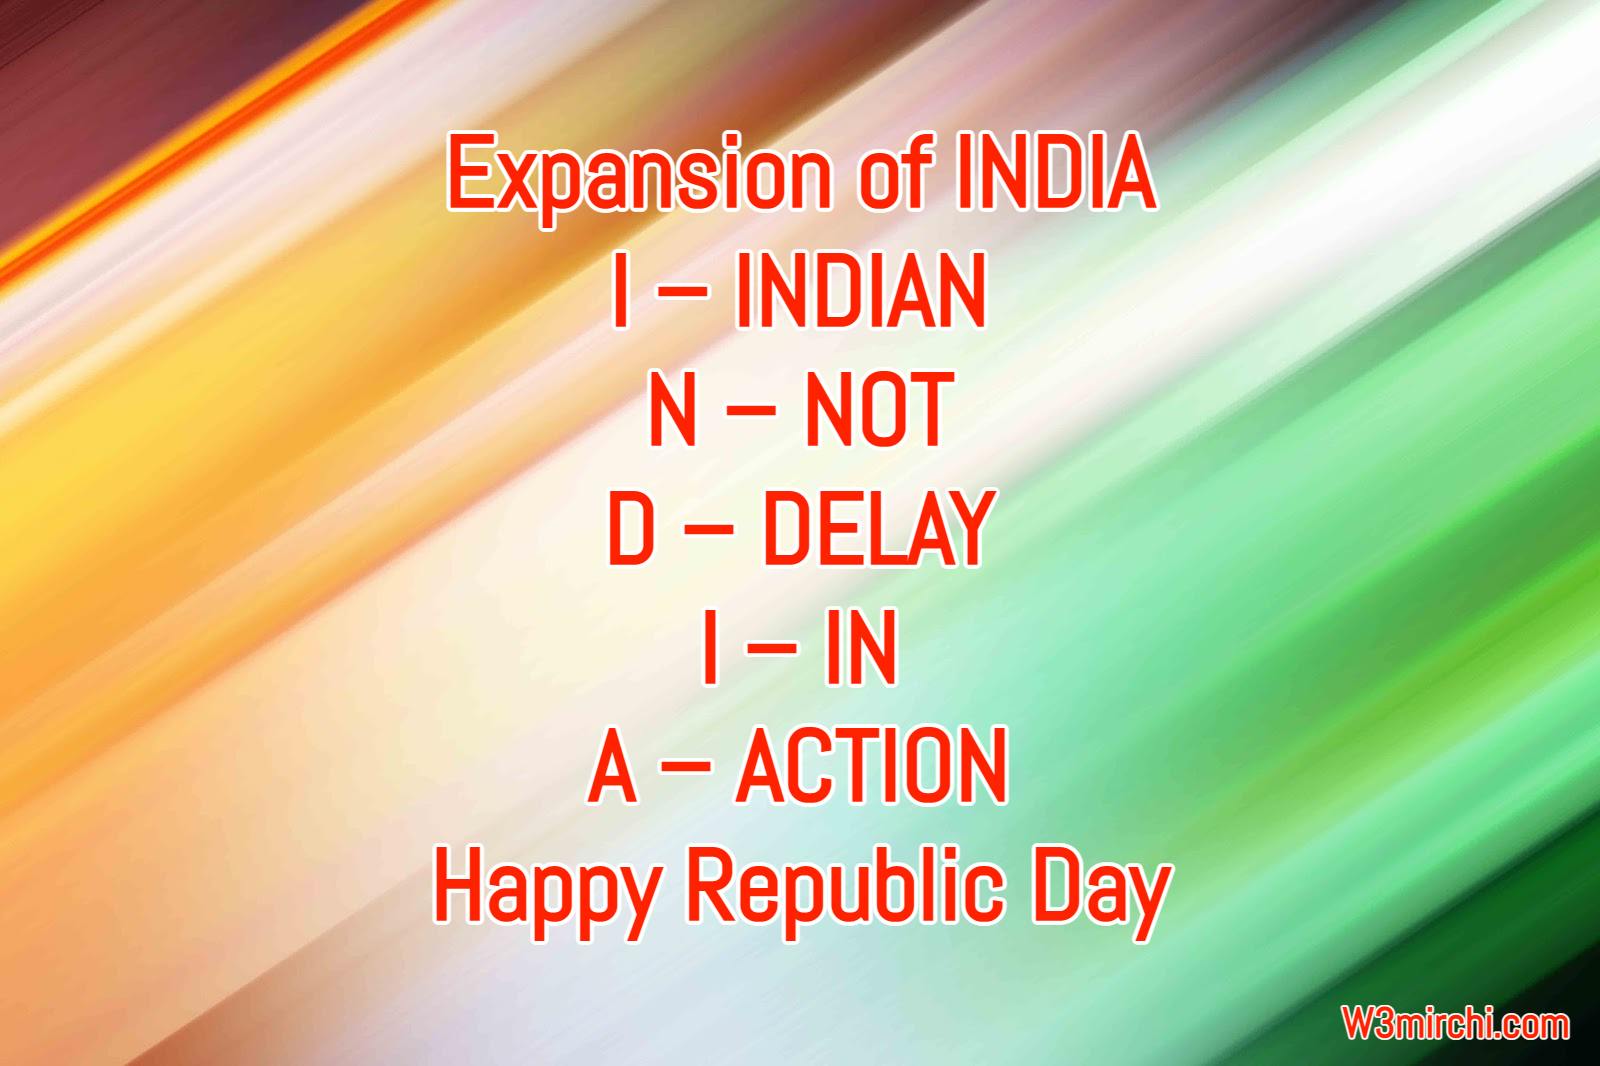 Happy Republic Day - Republic Day Quotes And Shayari